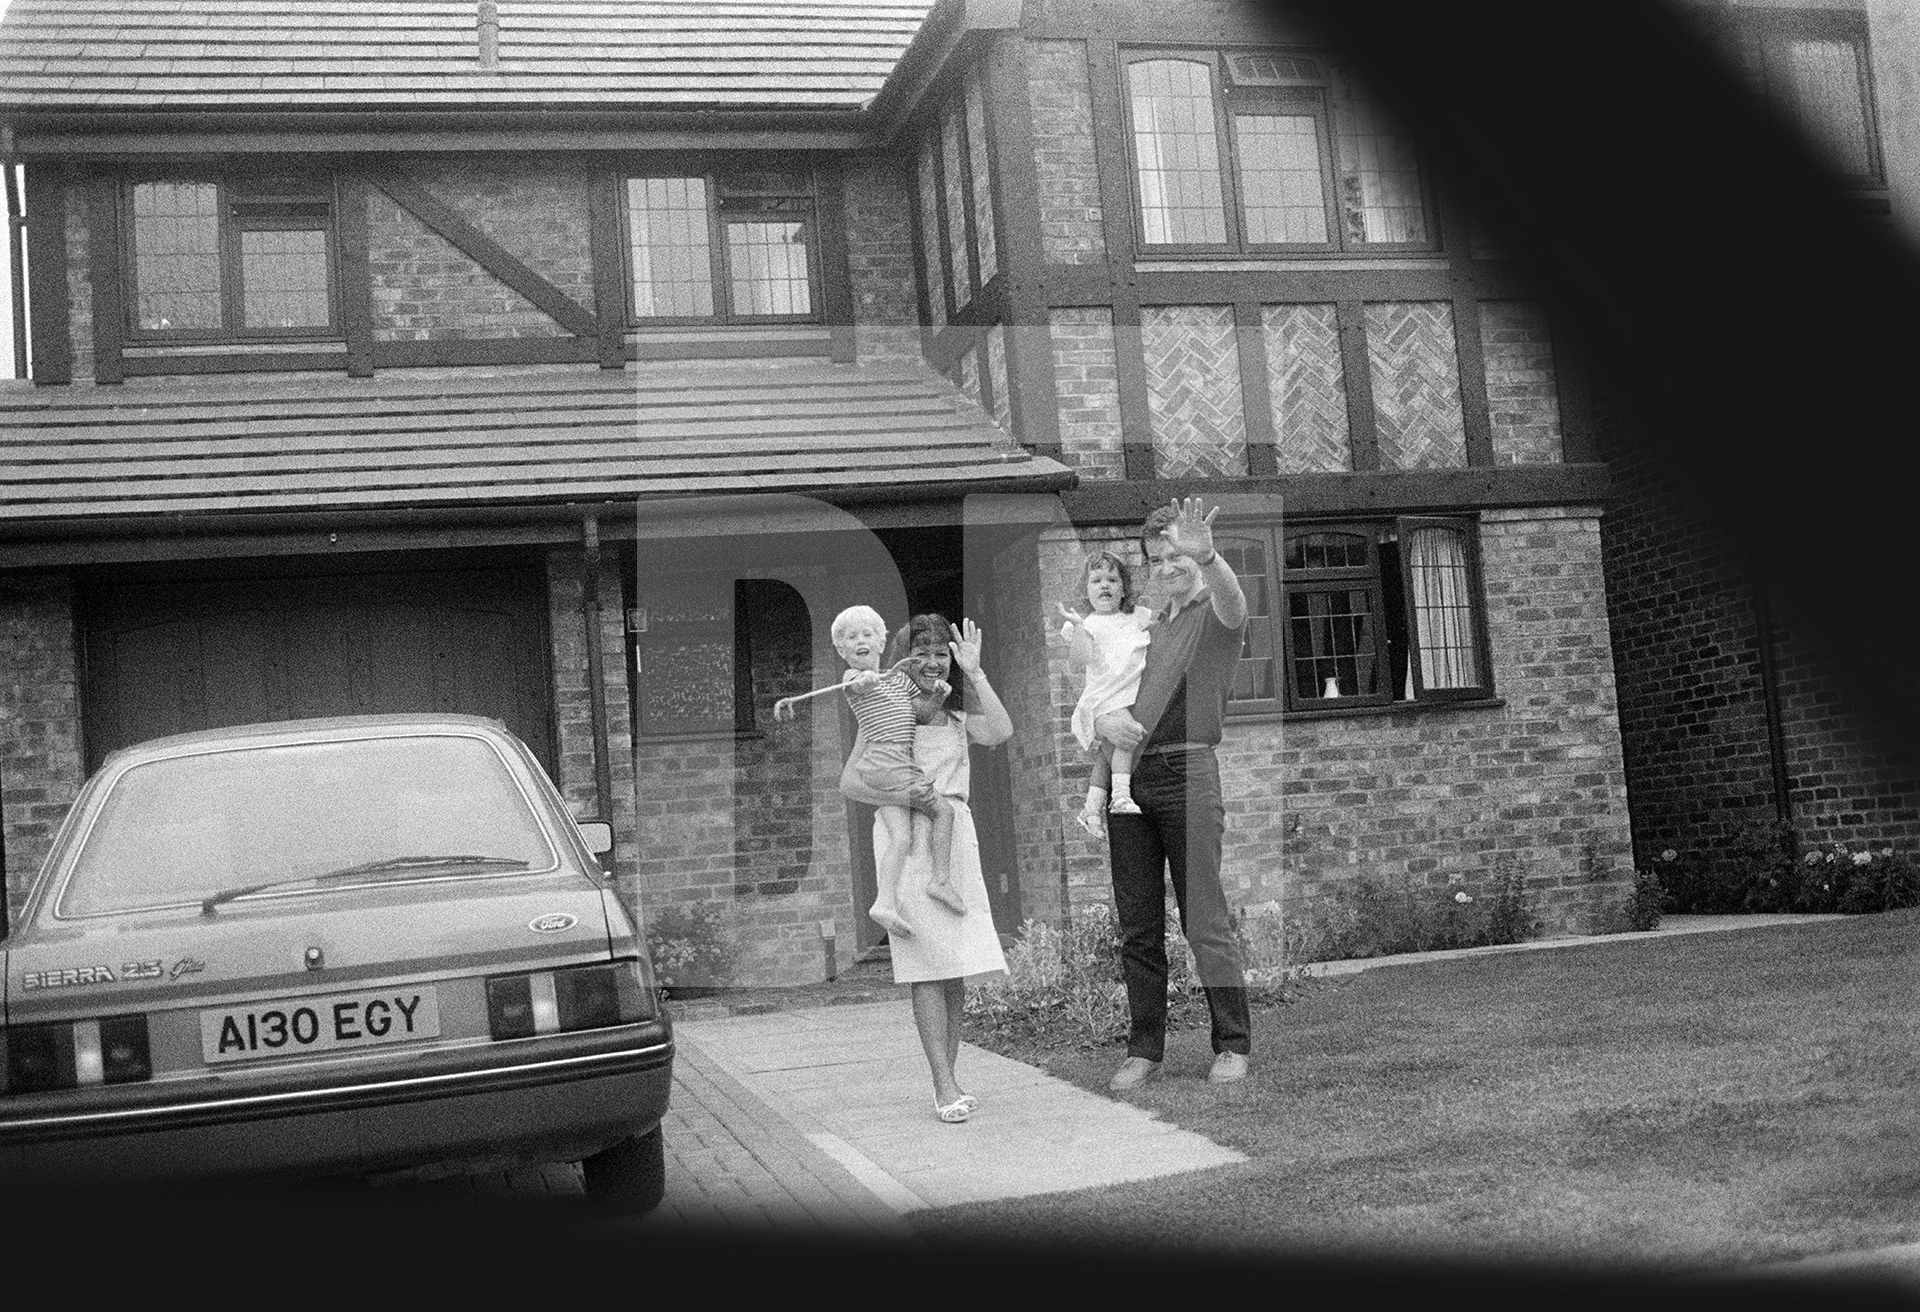 Waving bye-bye, Shortlands, Kent. April 1985 by Daniel Meadows